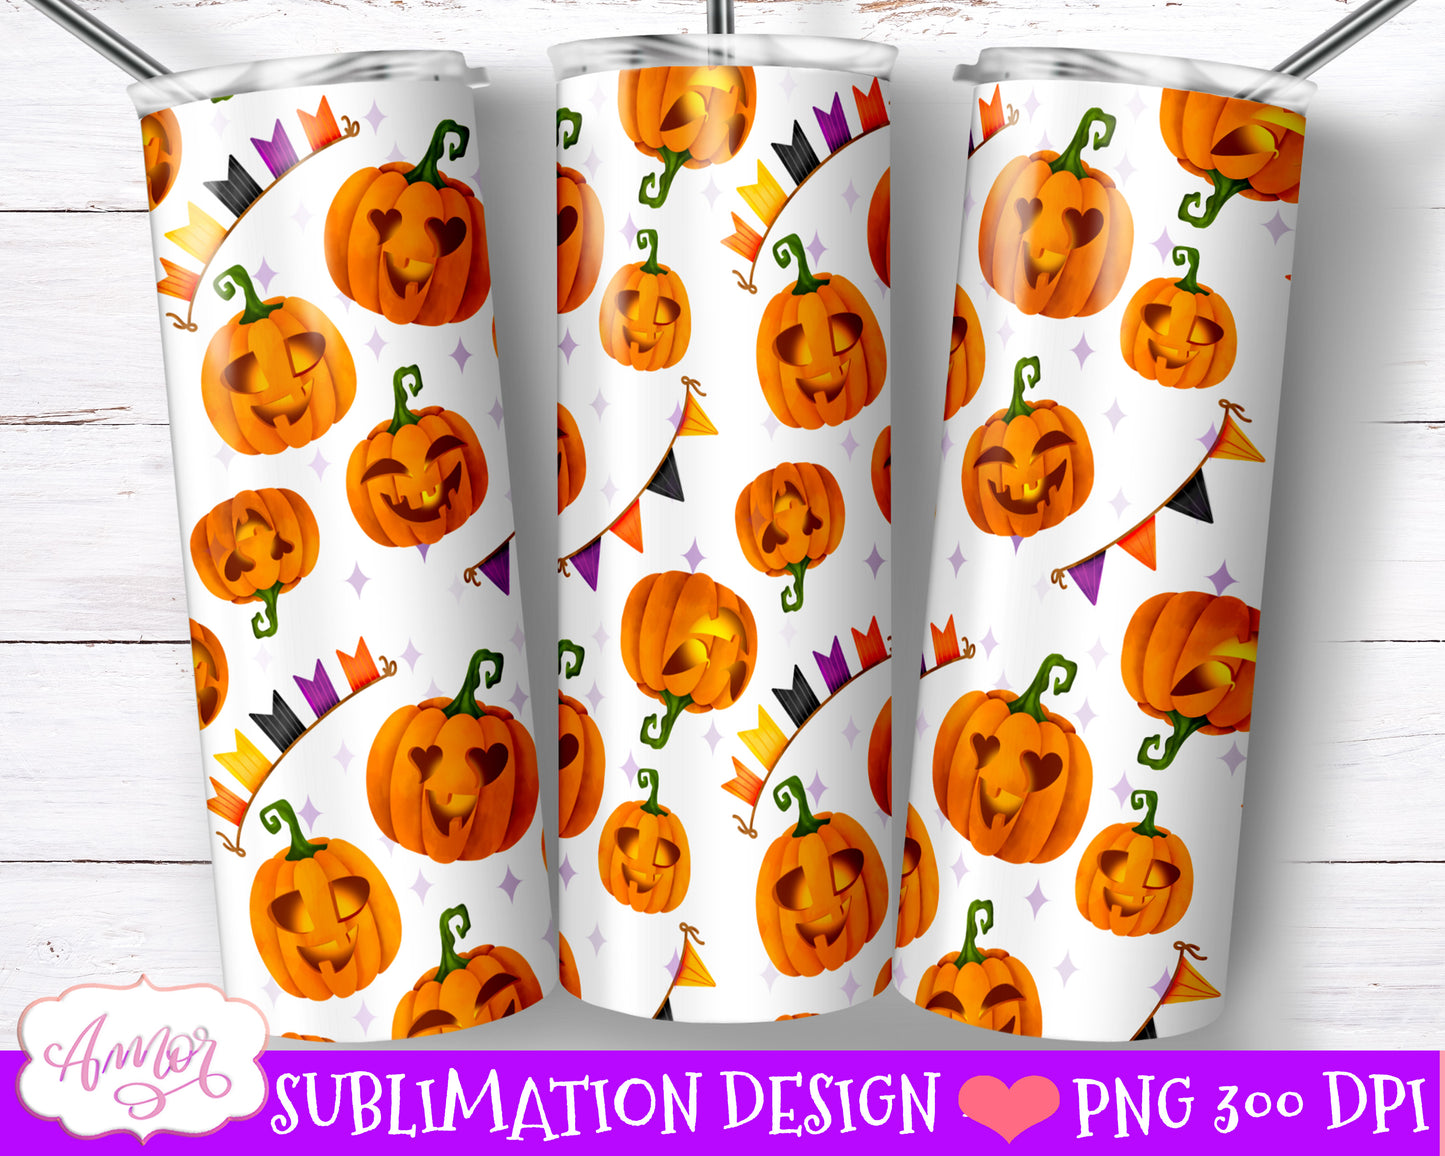 BUNDLE Halloween tumbler wrap PNG for sublimation